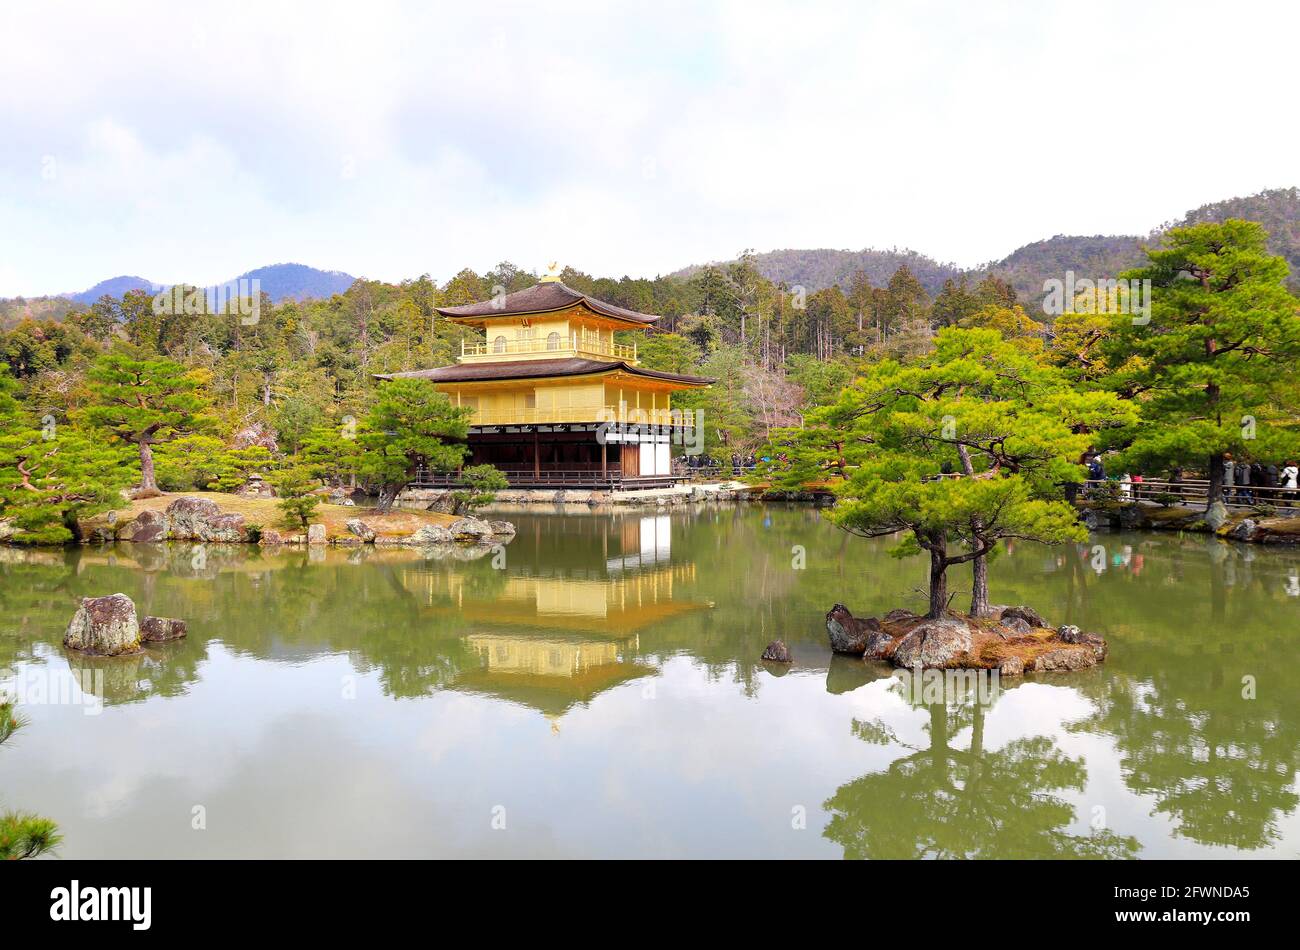 The Golden Pavilion (Kinkaku-ji Temple) in Rokuon-ji complex (Deer Garden Temple), Kyoto, Japan. UNESCO world heritage site Stock Photo